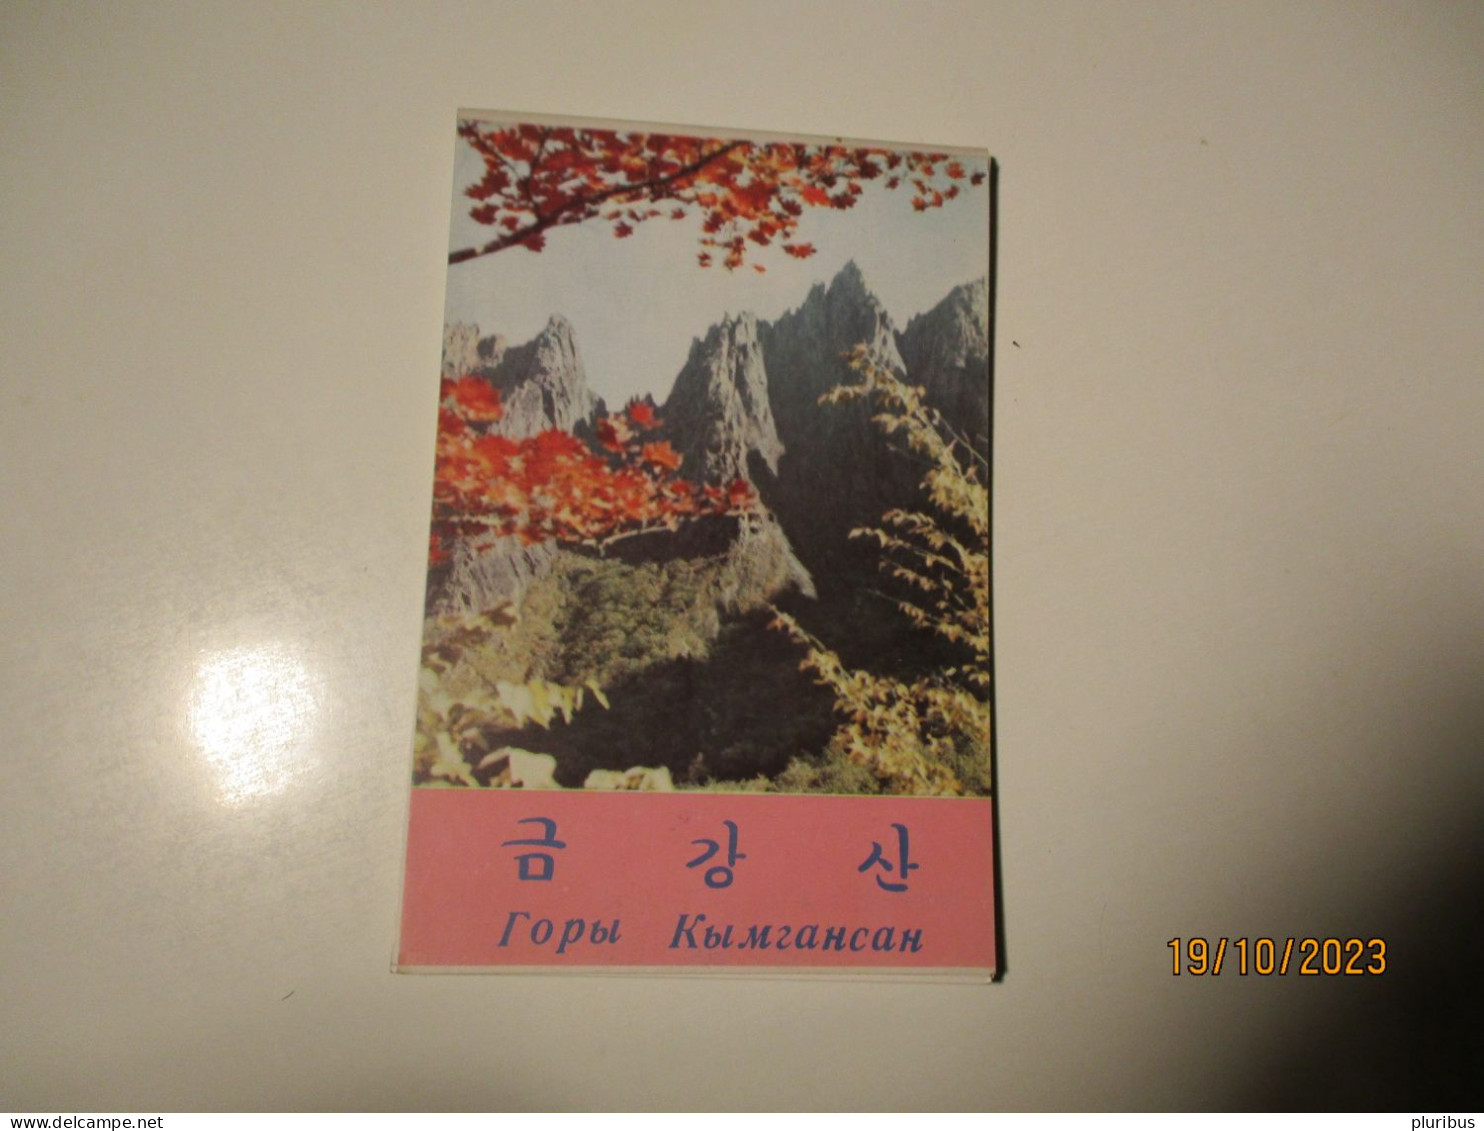 NORTH KOREA , SET OF 9 POSTCARDS KYMGANSAN KUMGANSAN KUMGAN MOUNTAINS 1969 - Korea, North